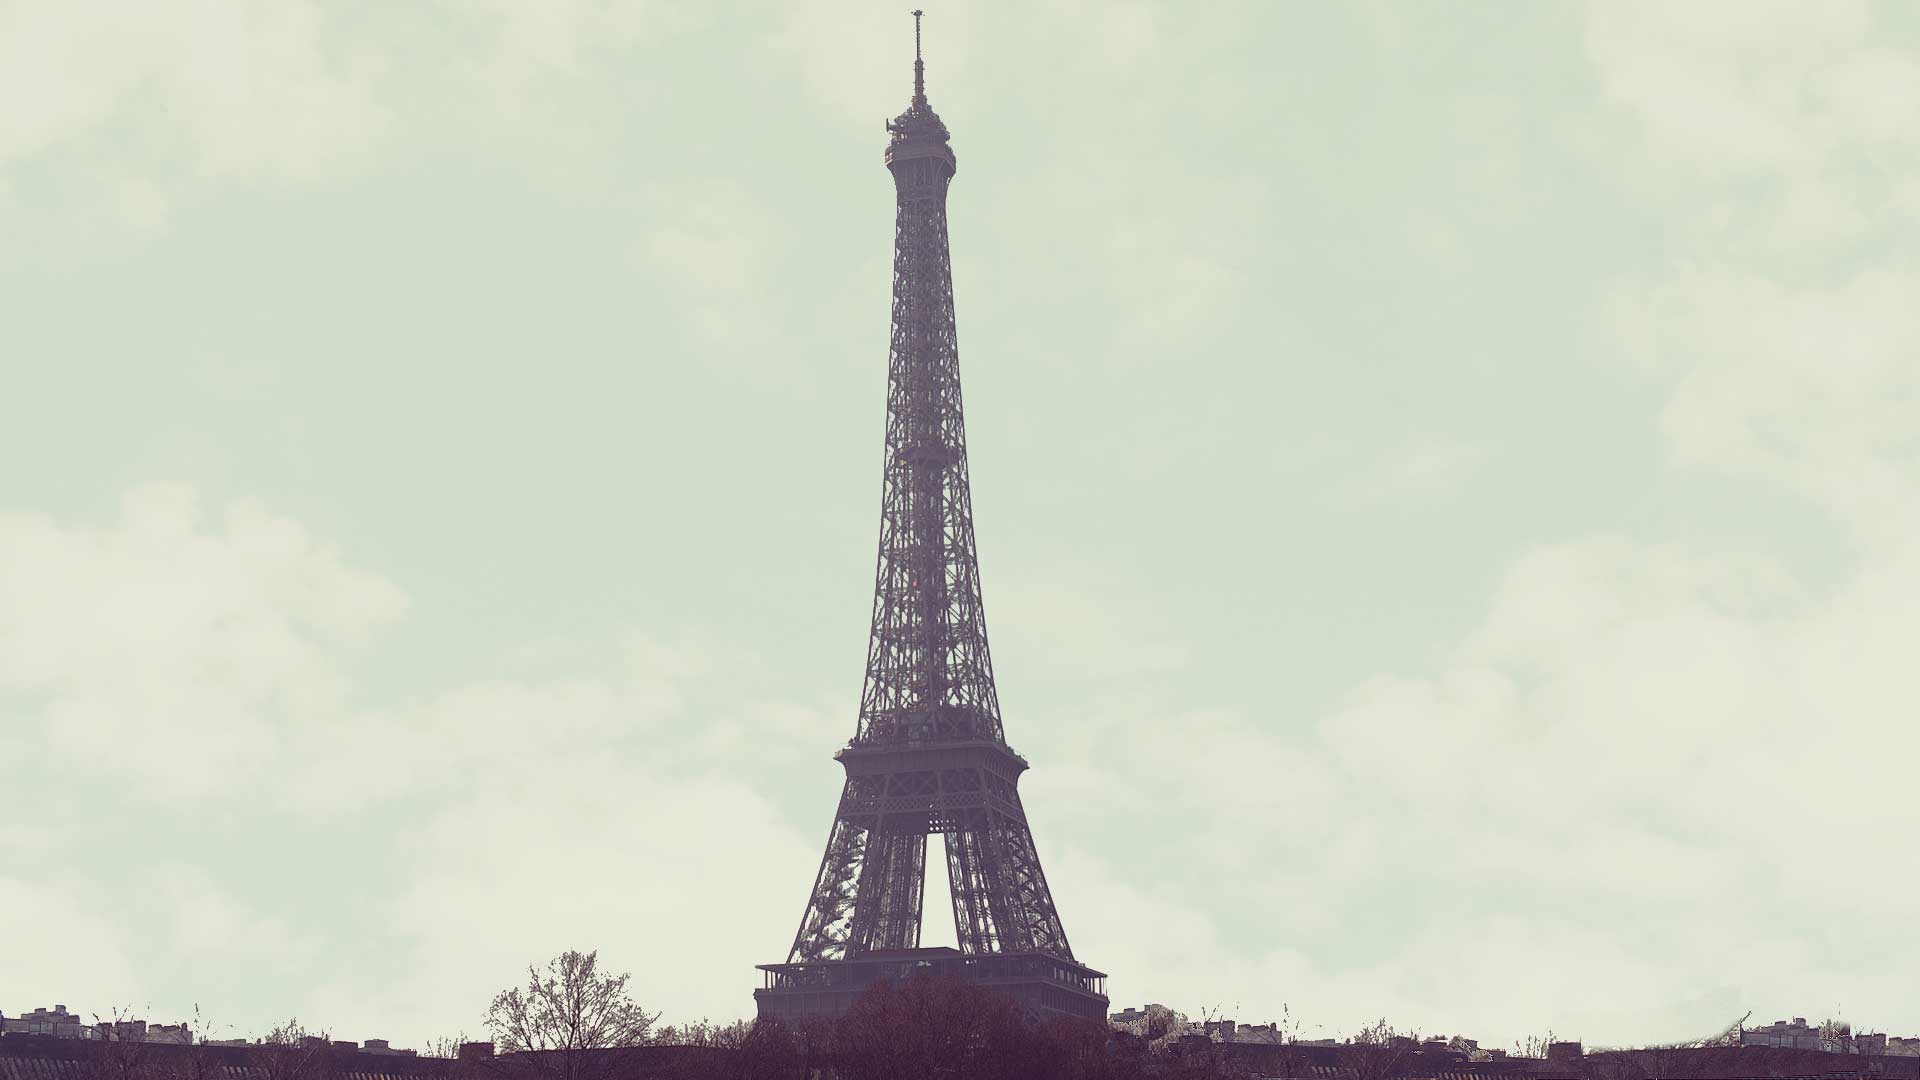 - The Eiffel Tower